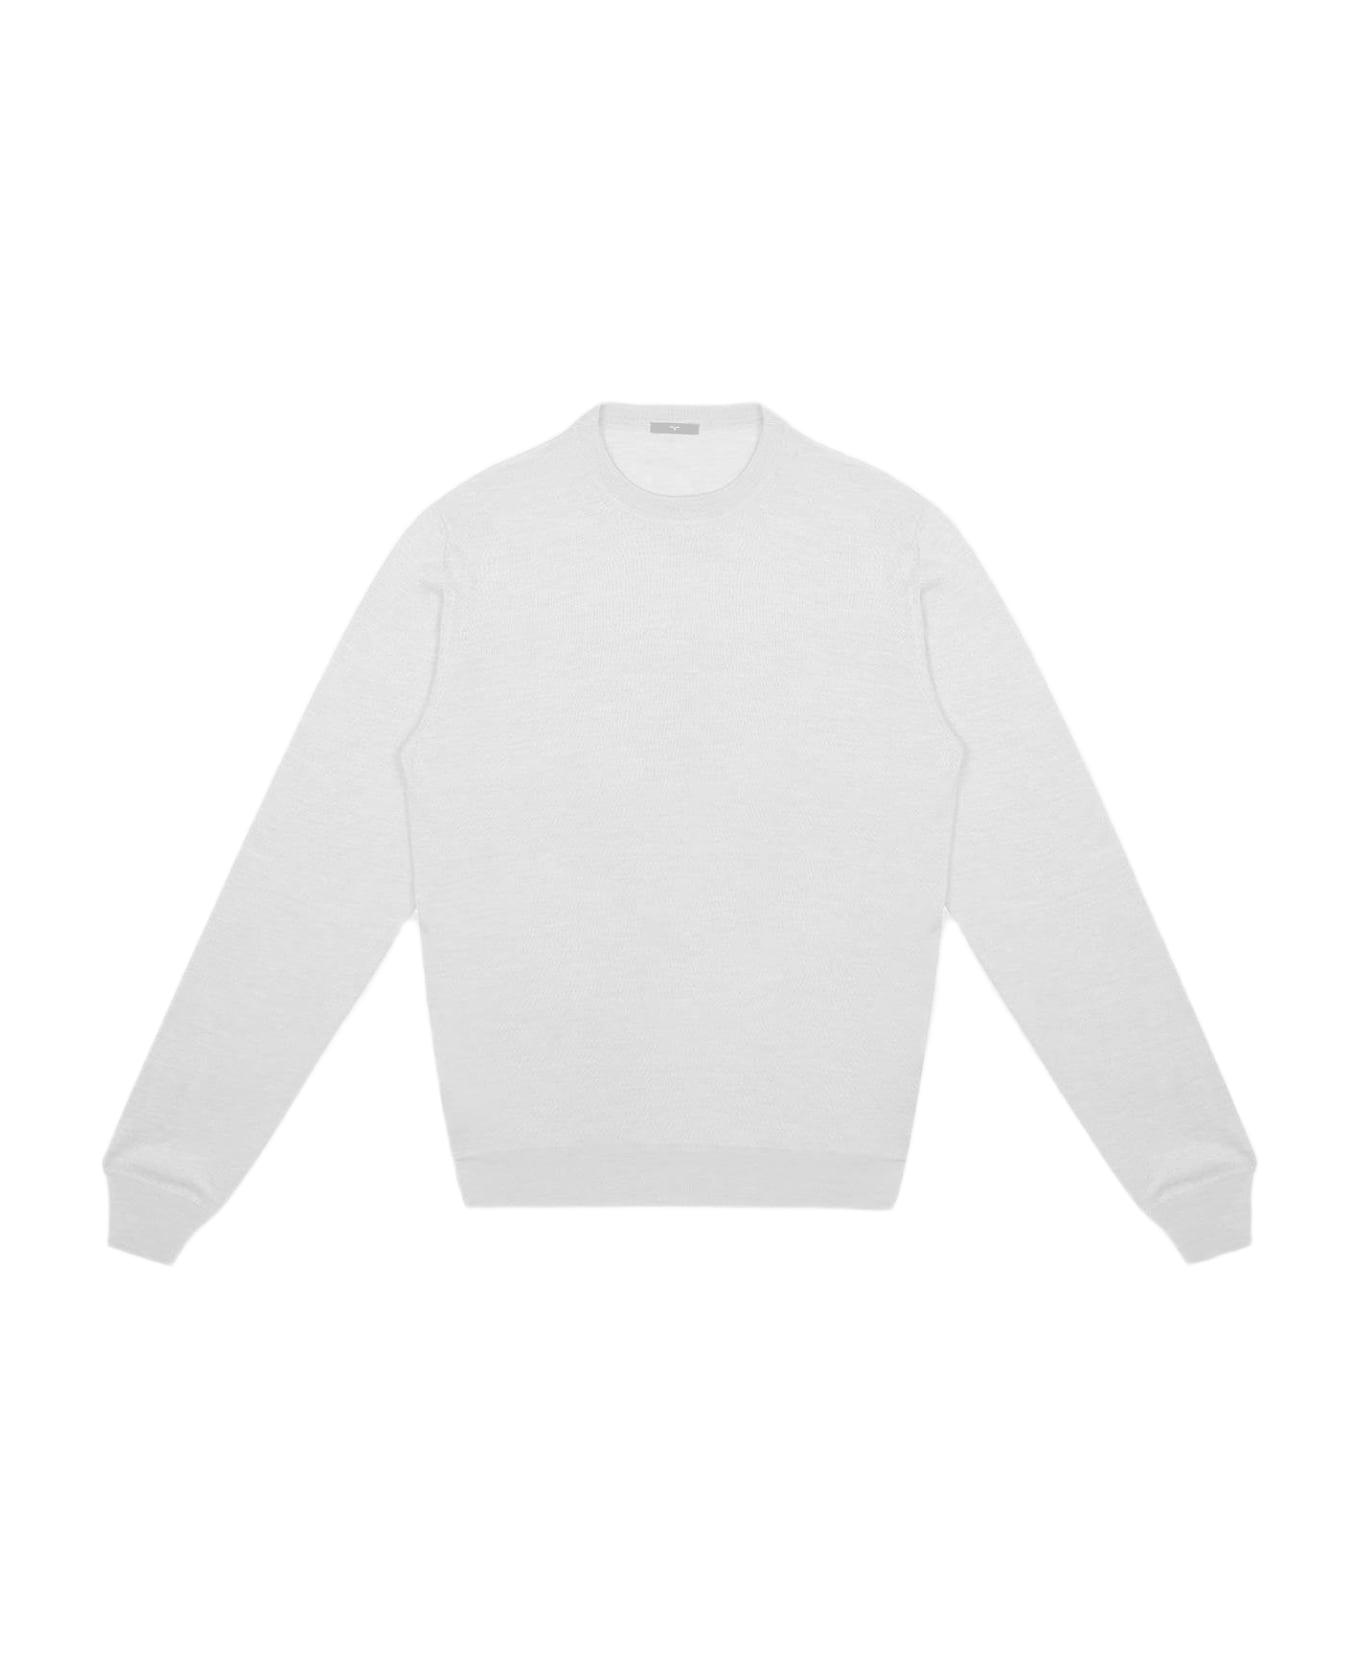 Larusmiani Cap Martin Crew Neck Sweater - White フリース